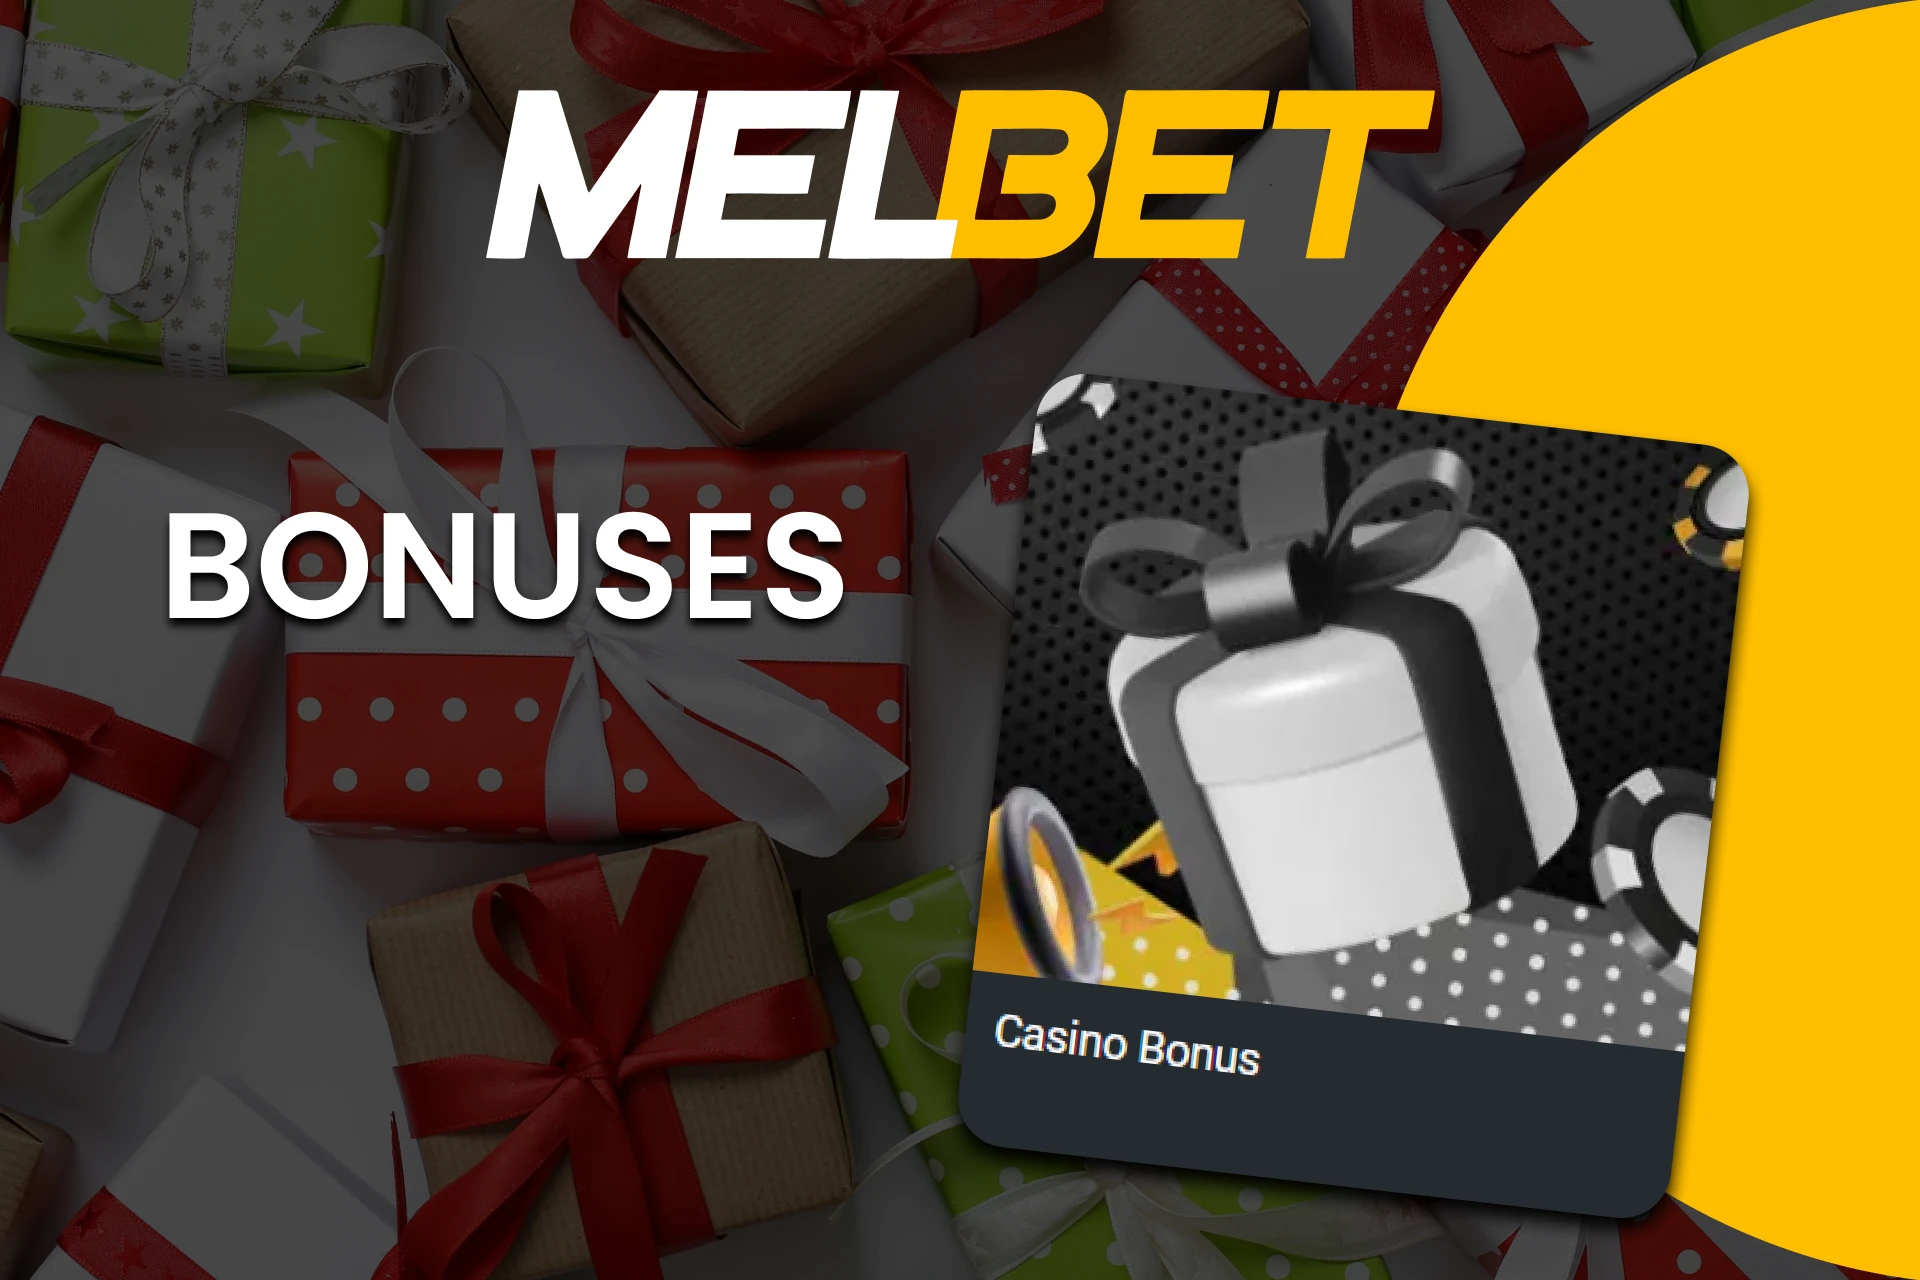 Melbet gives a bonus for playing Slots.